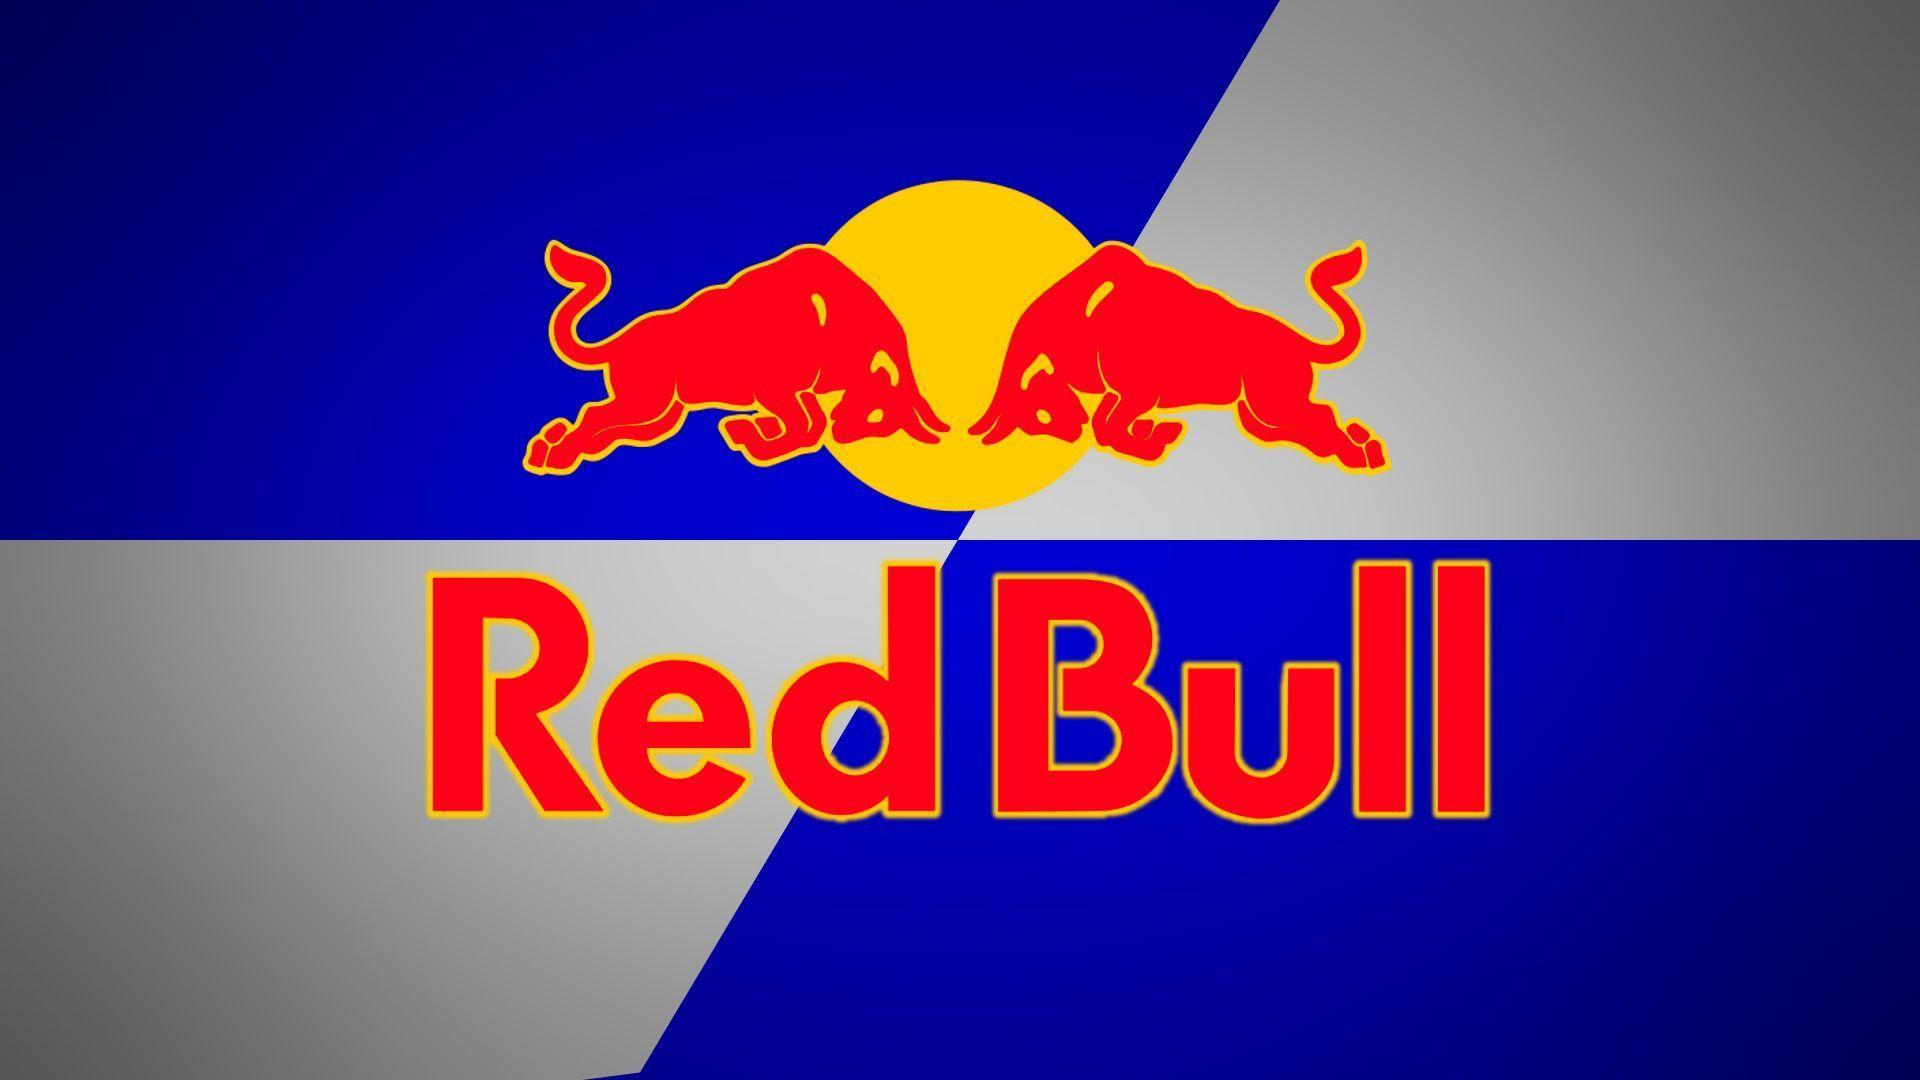 Red bull logo wallpapers